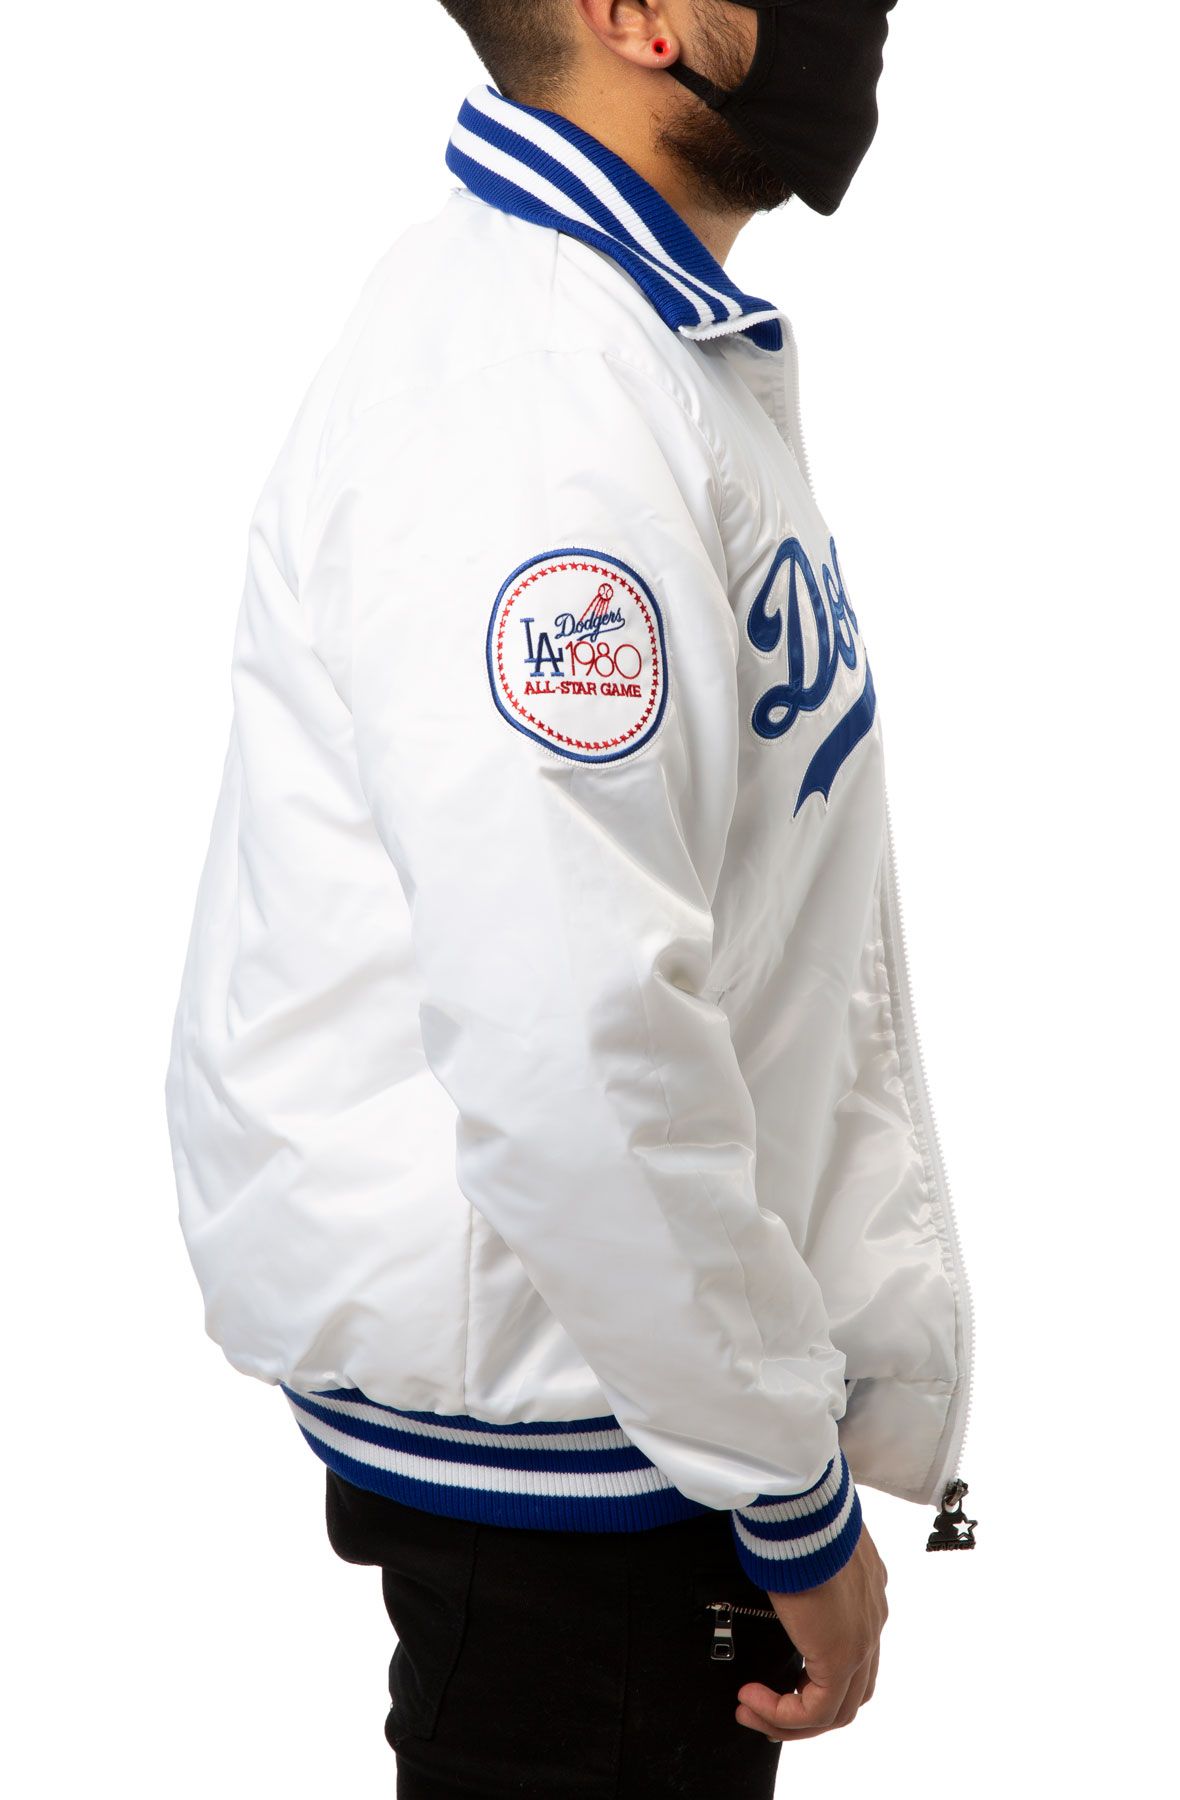 STARTER Los Angeles Dodgers Zip-Up Jacket LS97W169LAD - Shiekh